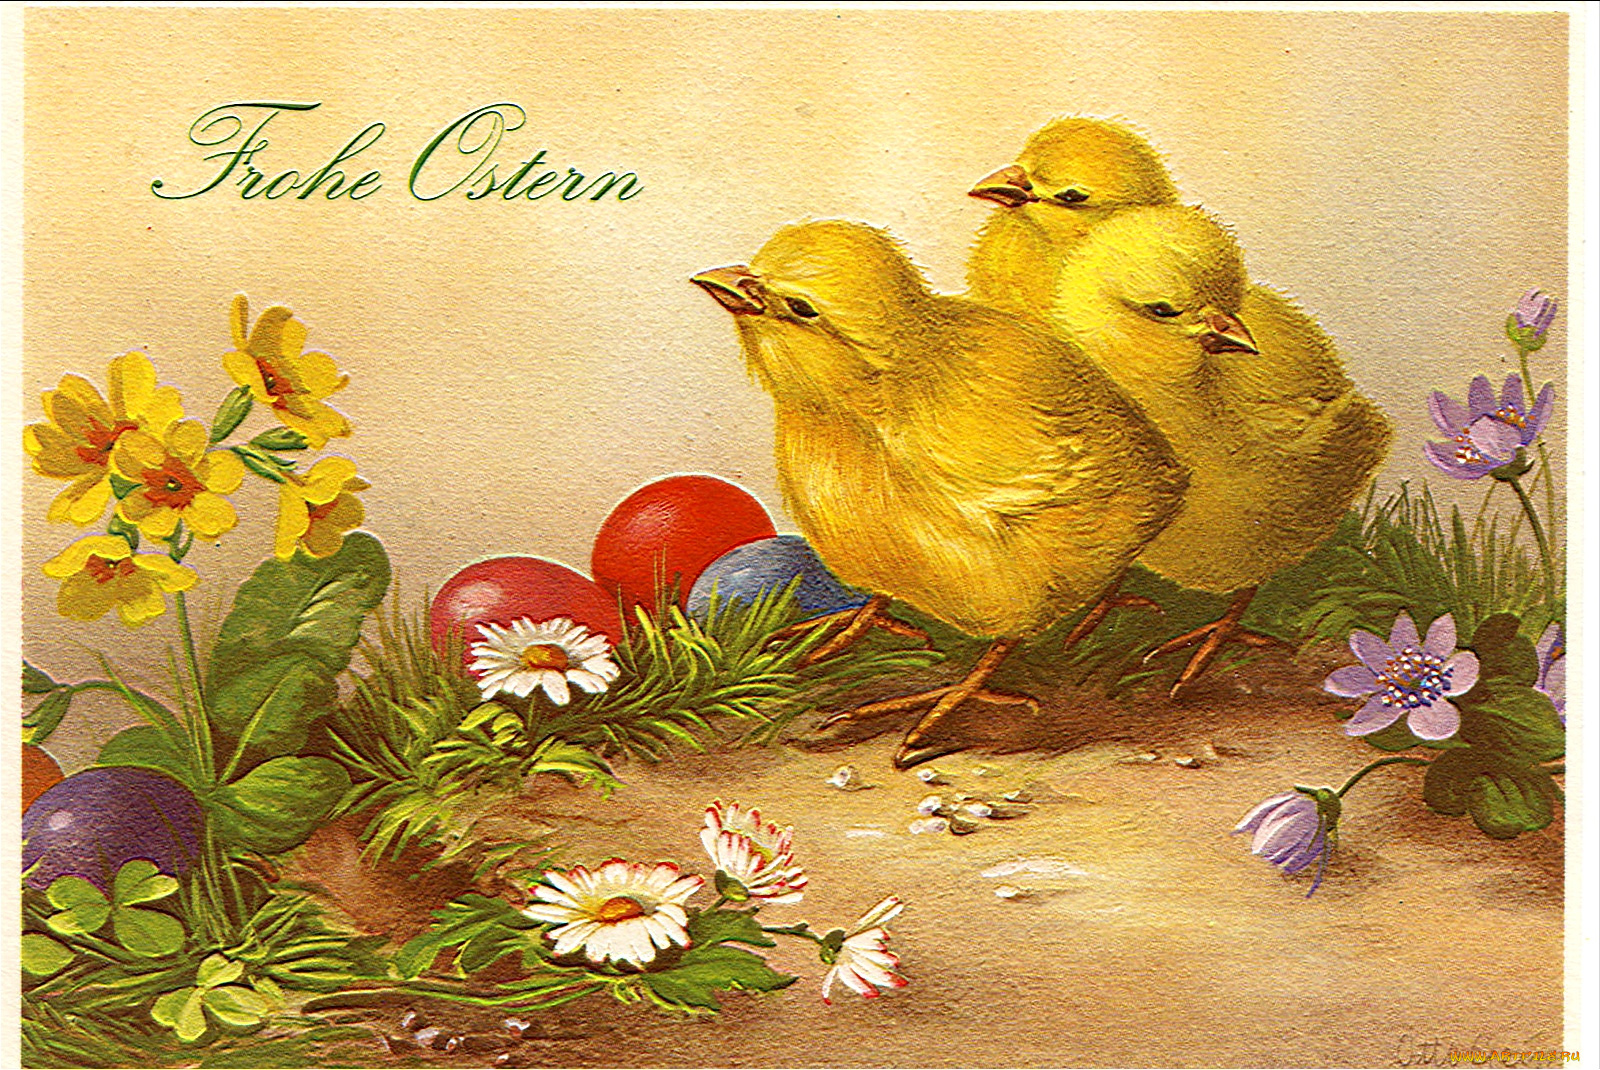 праздничные, пасха, открытка, цыплята, цветы, яйца